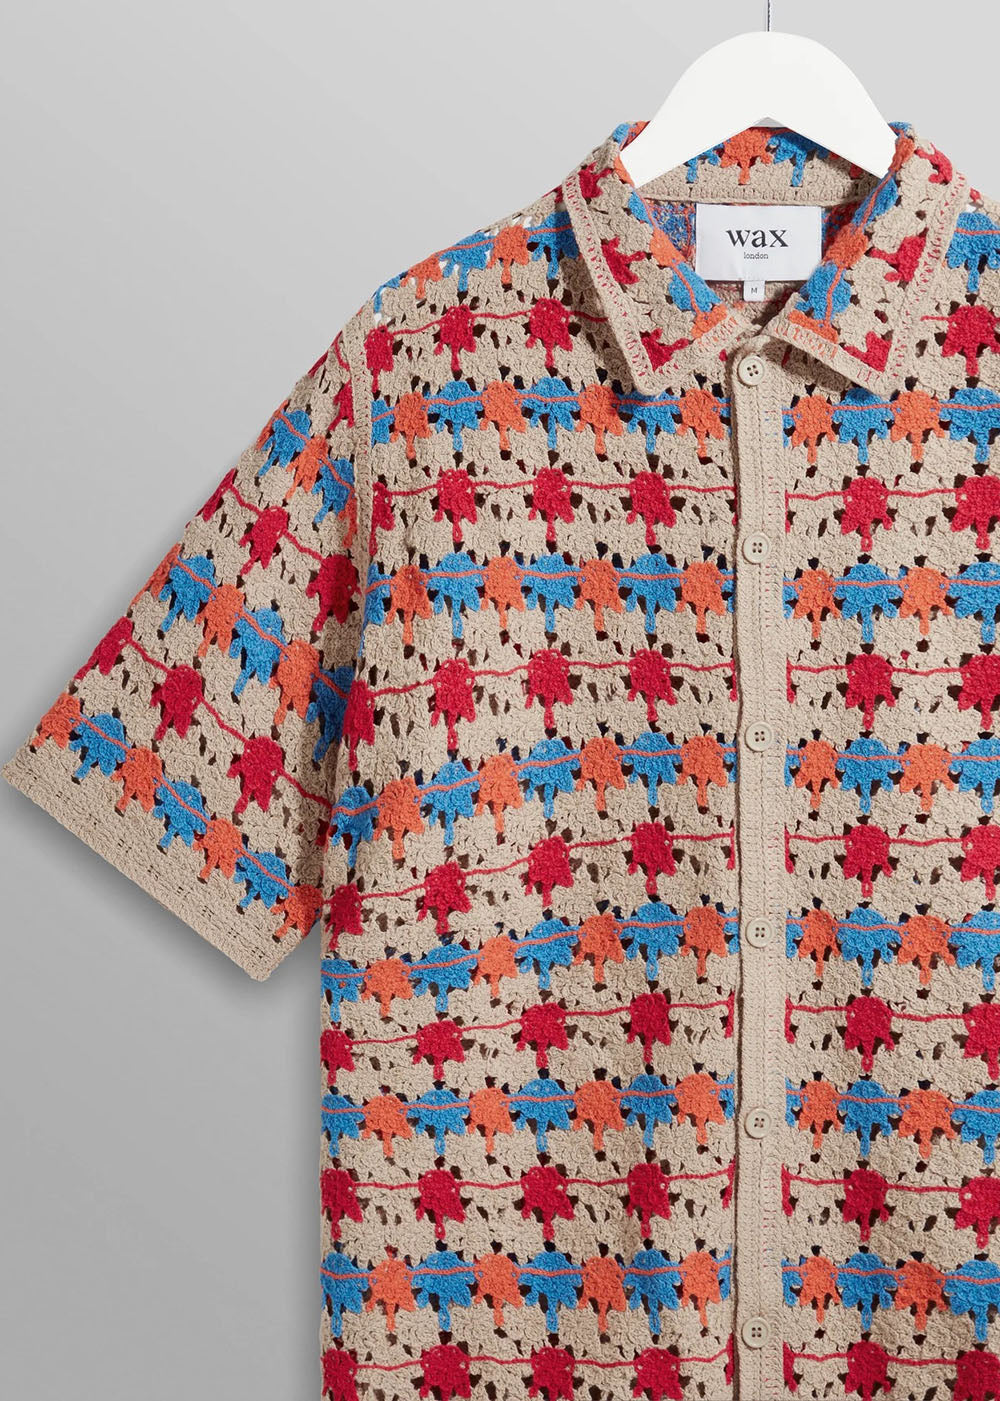 Porto Shirt Splash Crochet - Multi Colored - Wax London Canada - Danali